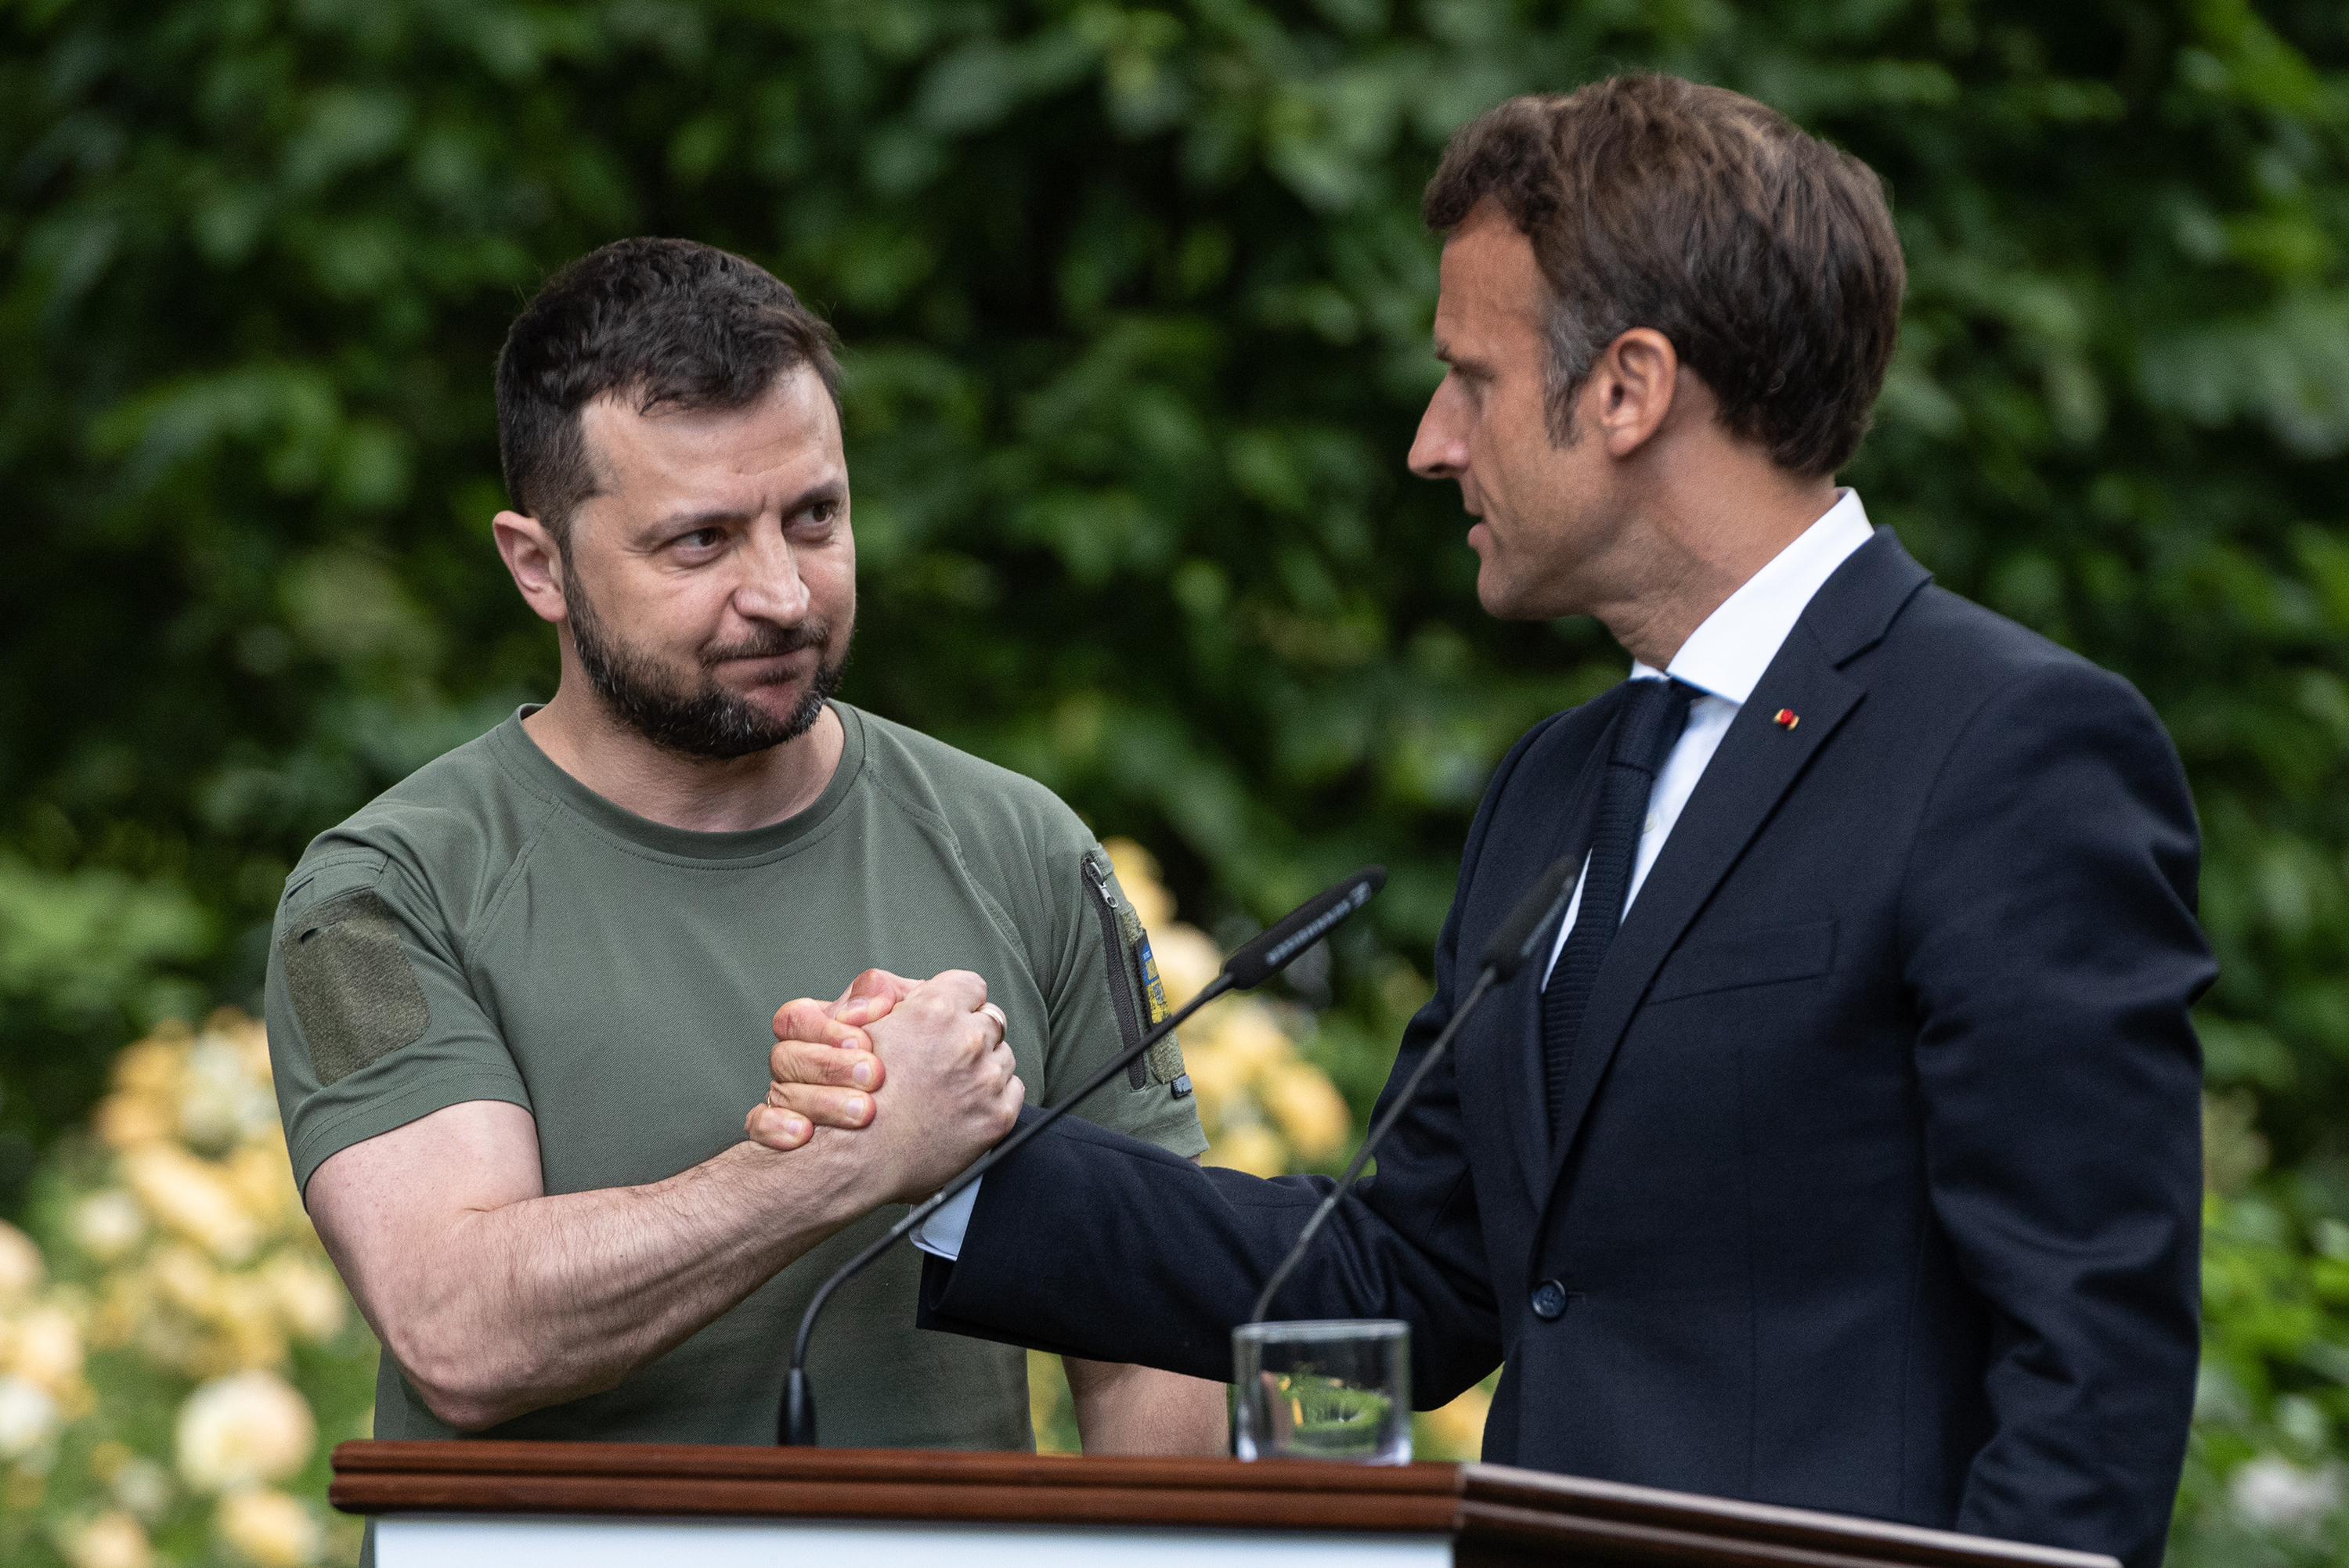 Ukrainian President Volodymyr Zelensky and French President Emmanuel Macron shake hands after a press conference on Thursday in Kyiv, Ukraine.